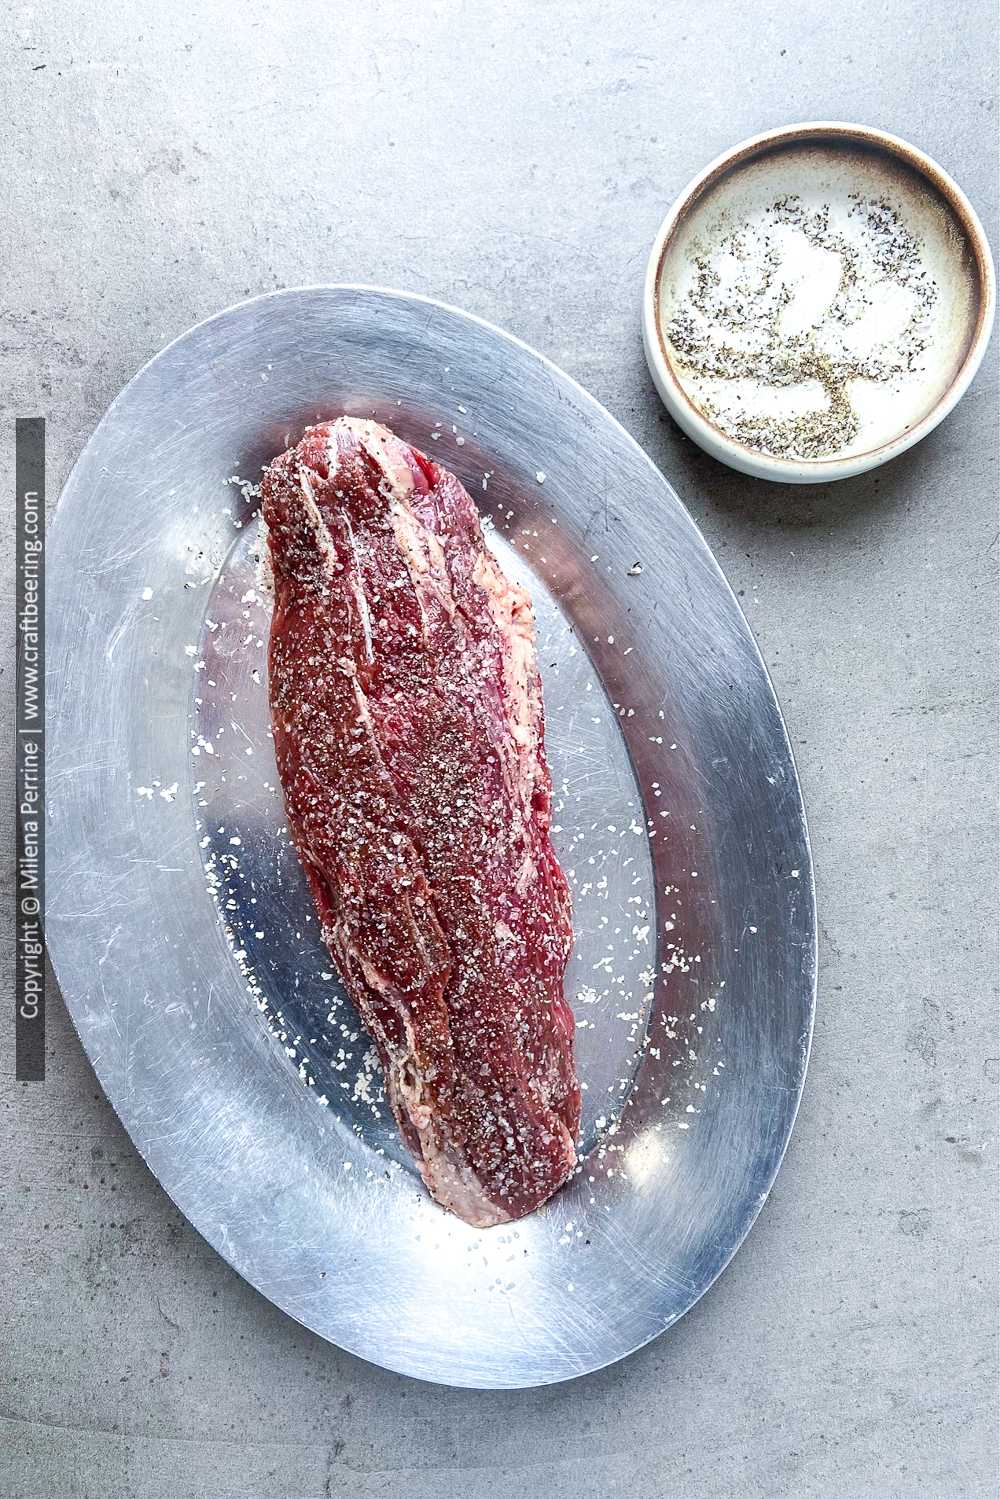 Raw teres major steak simply seasoned with salt and pepper.